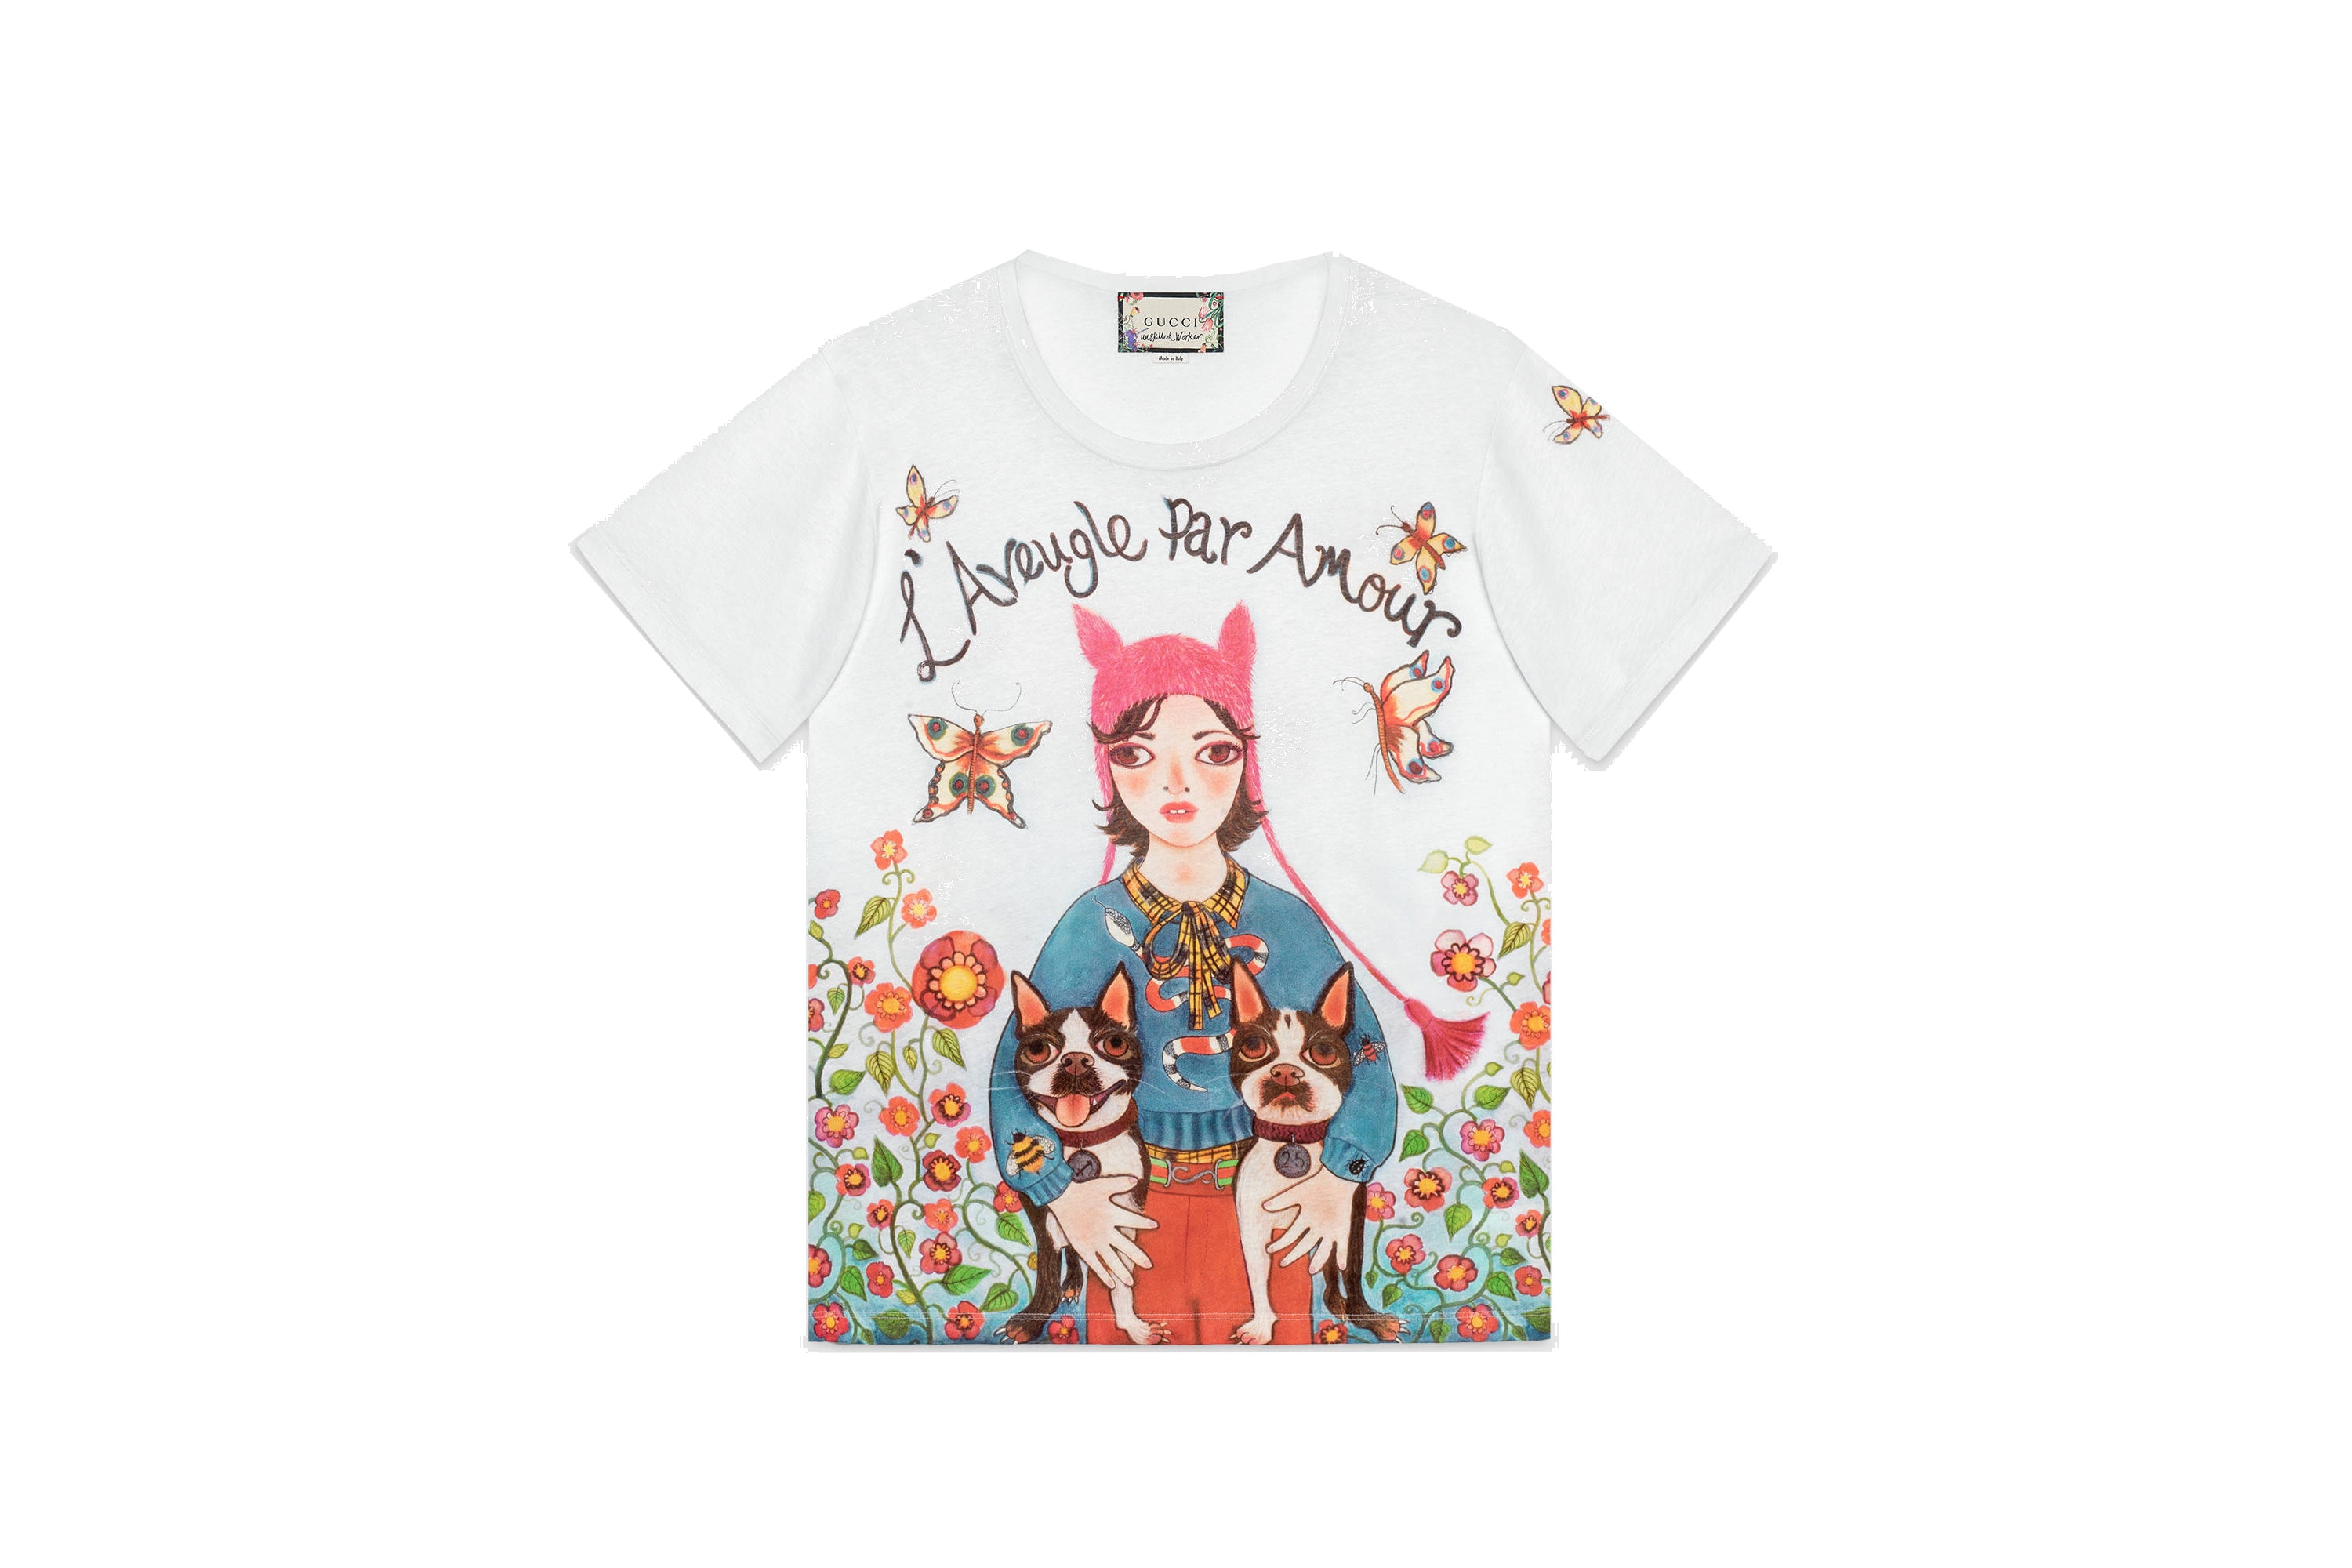 Gucci Logo T-Shirt Spring/Summer 2018 Restock Print Unknown Artist Coco Capitan Collaboration Prints Logo Retro Vintage Shirt Graphic Bold